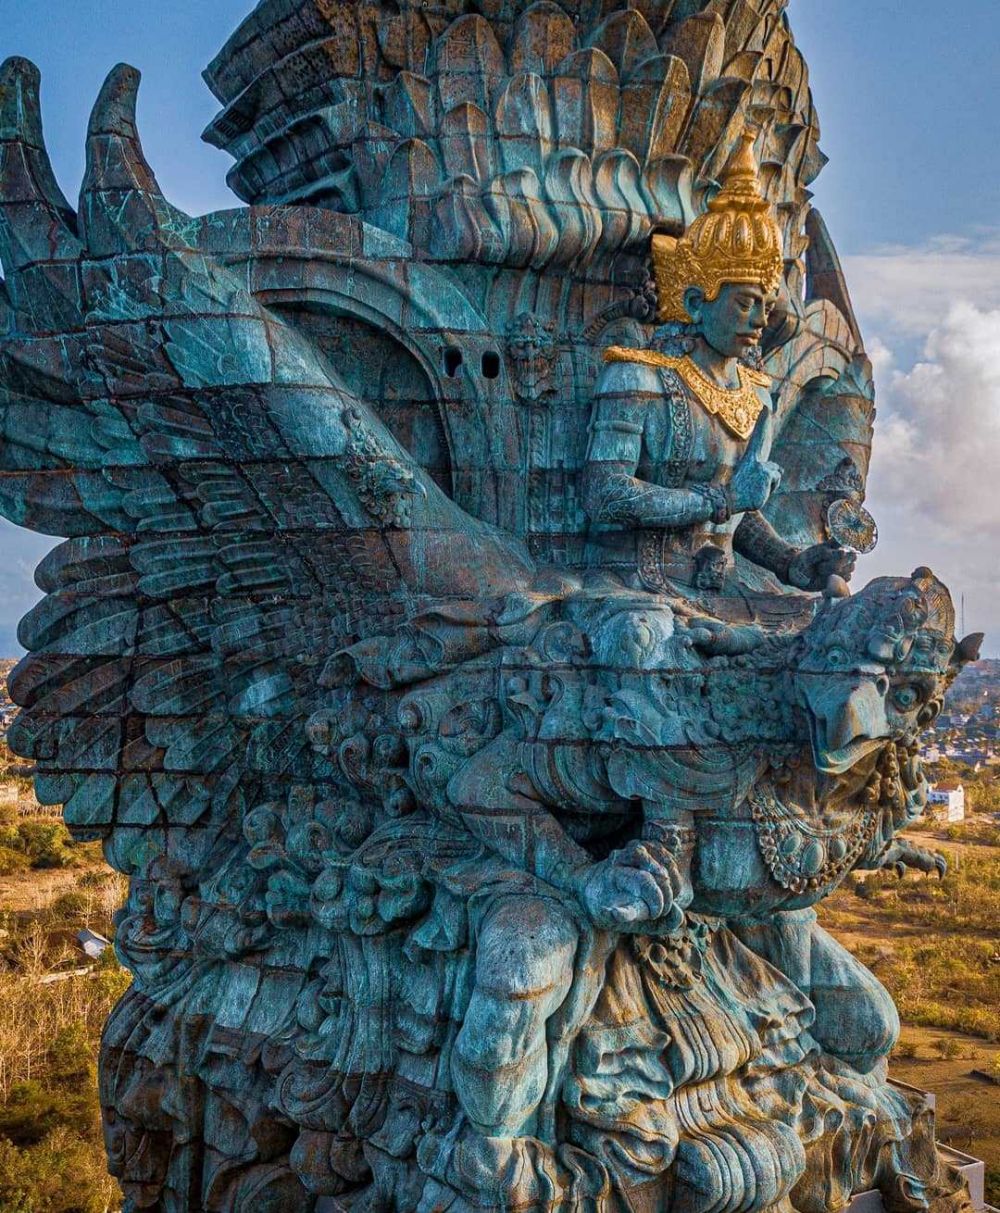 5 Fakta Garuda Wisnu Kencana, Monumen Ikonik di Pulau Dewata